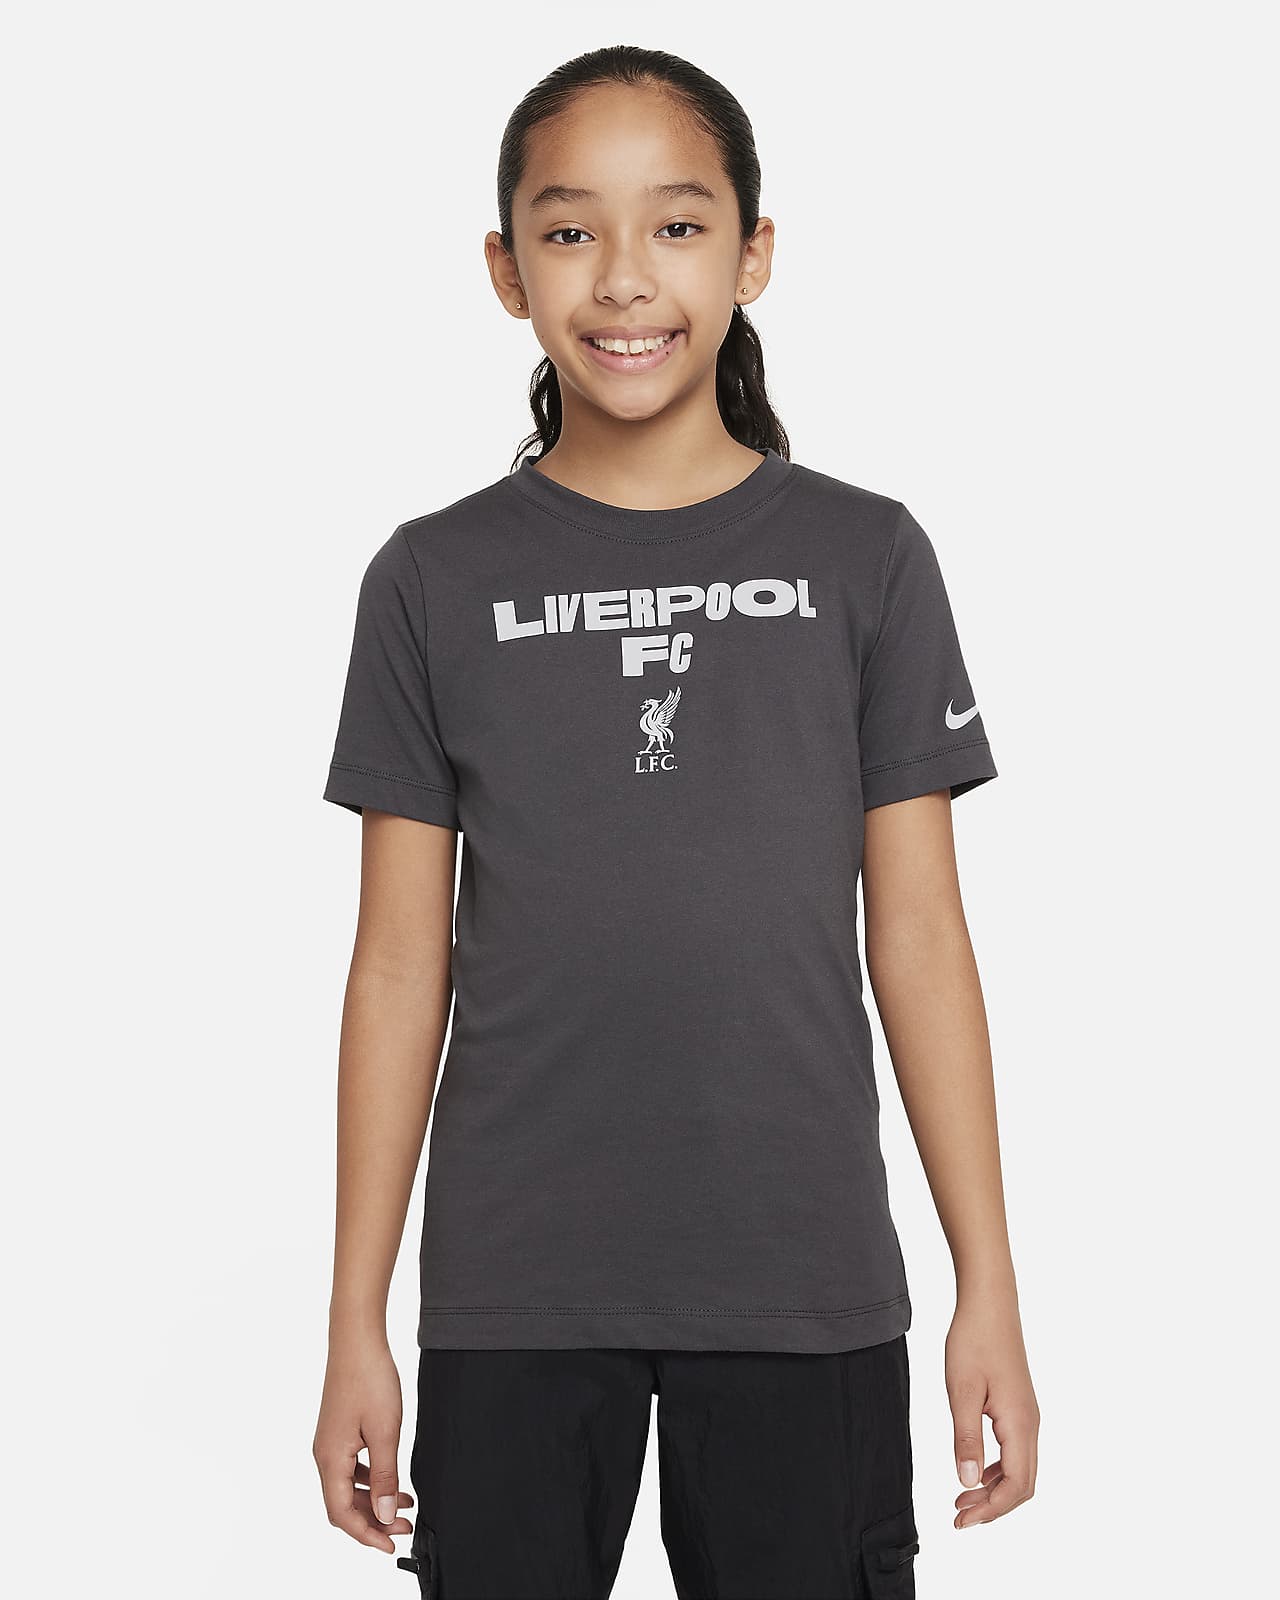 T-shirt de foot Nike Liverpool FC pour ado